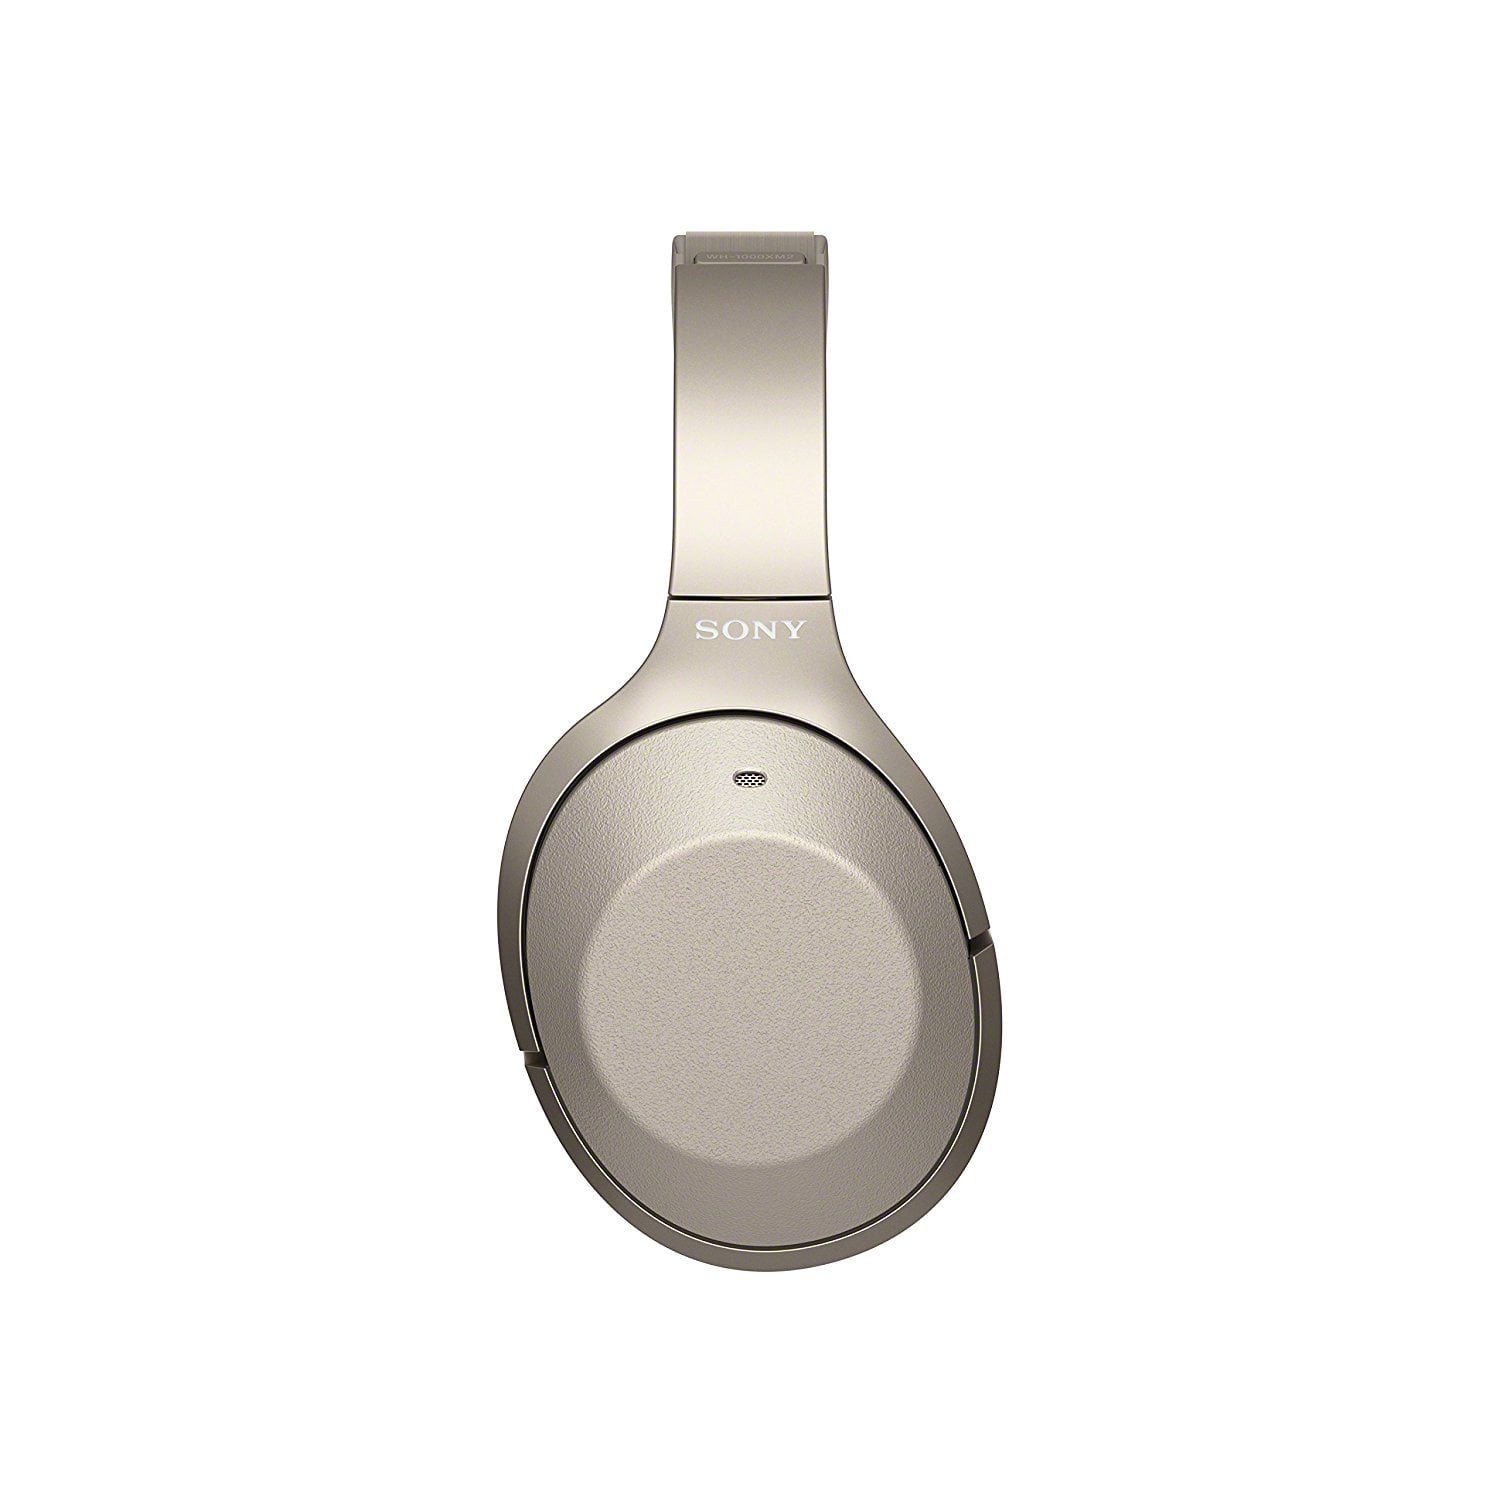 Sony Bluetooth Over-Ear Headphones, Gray, WH1000XM2/B - Walmart.com